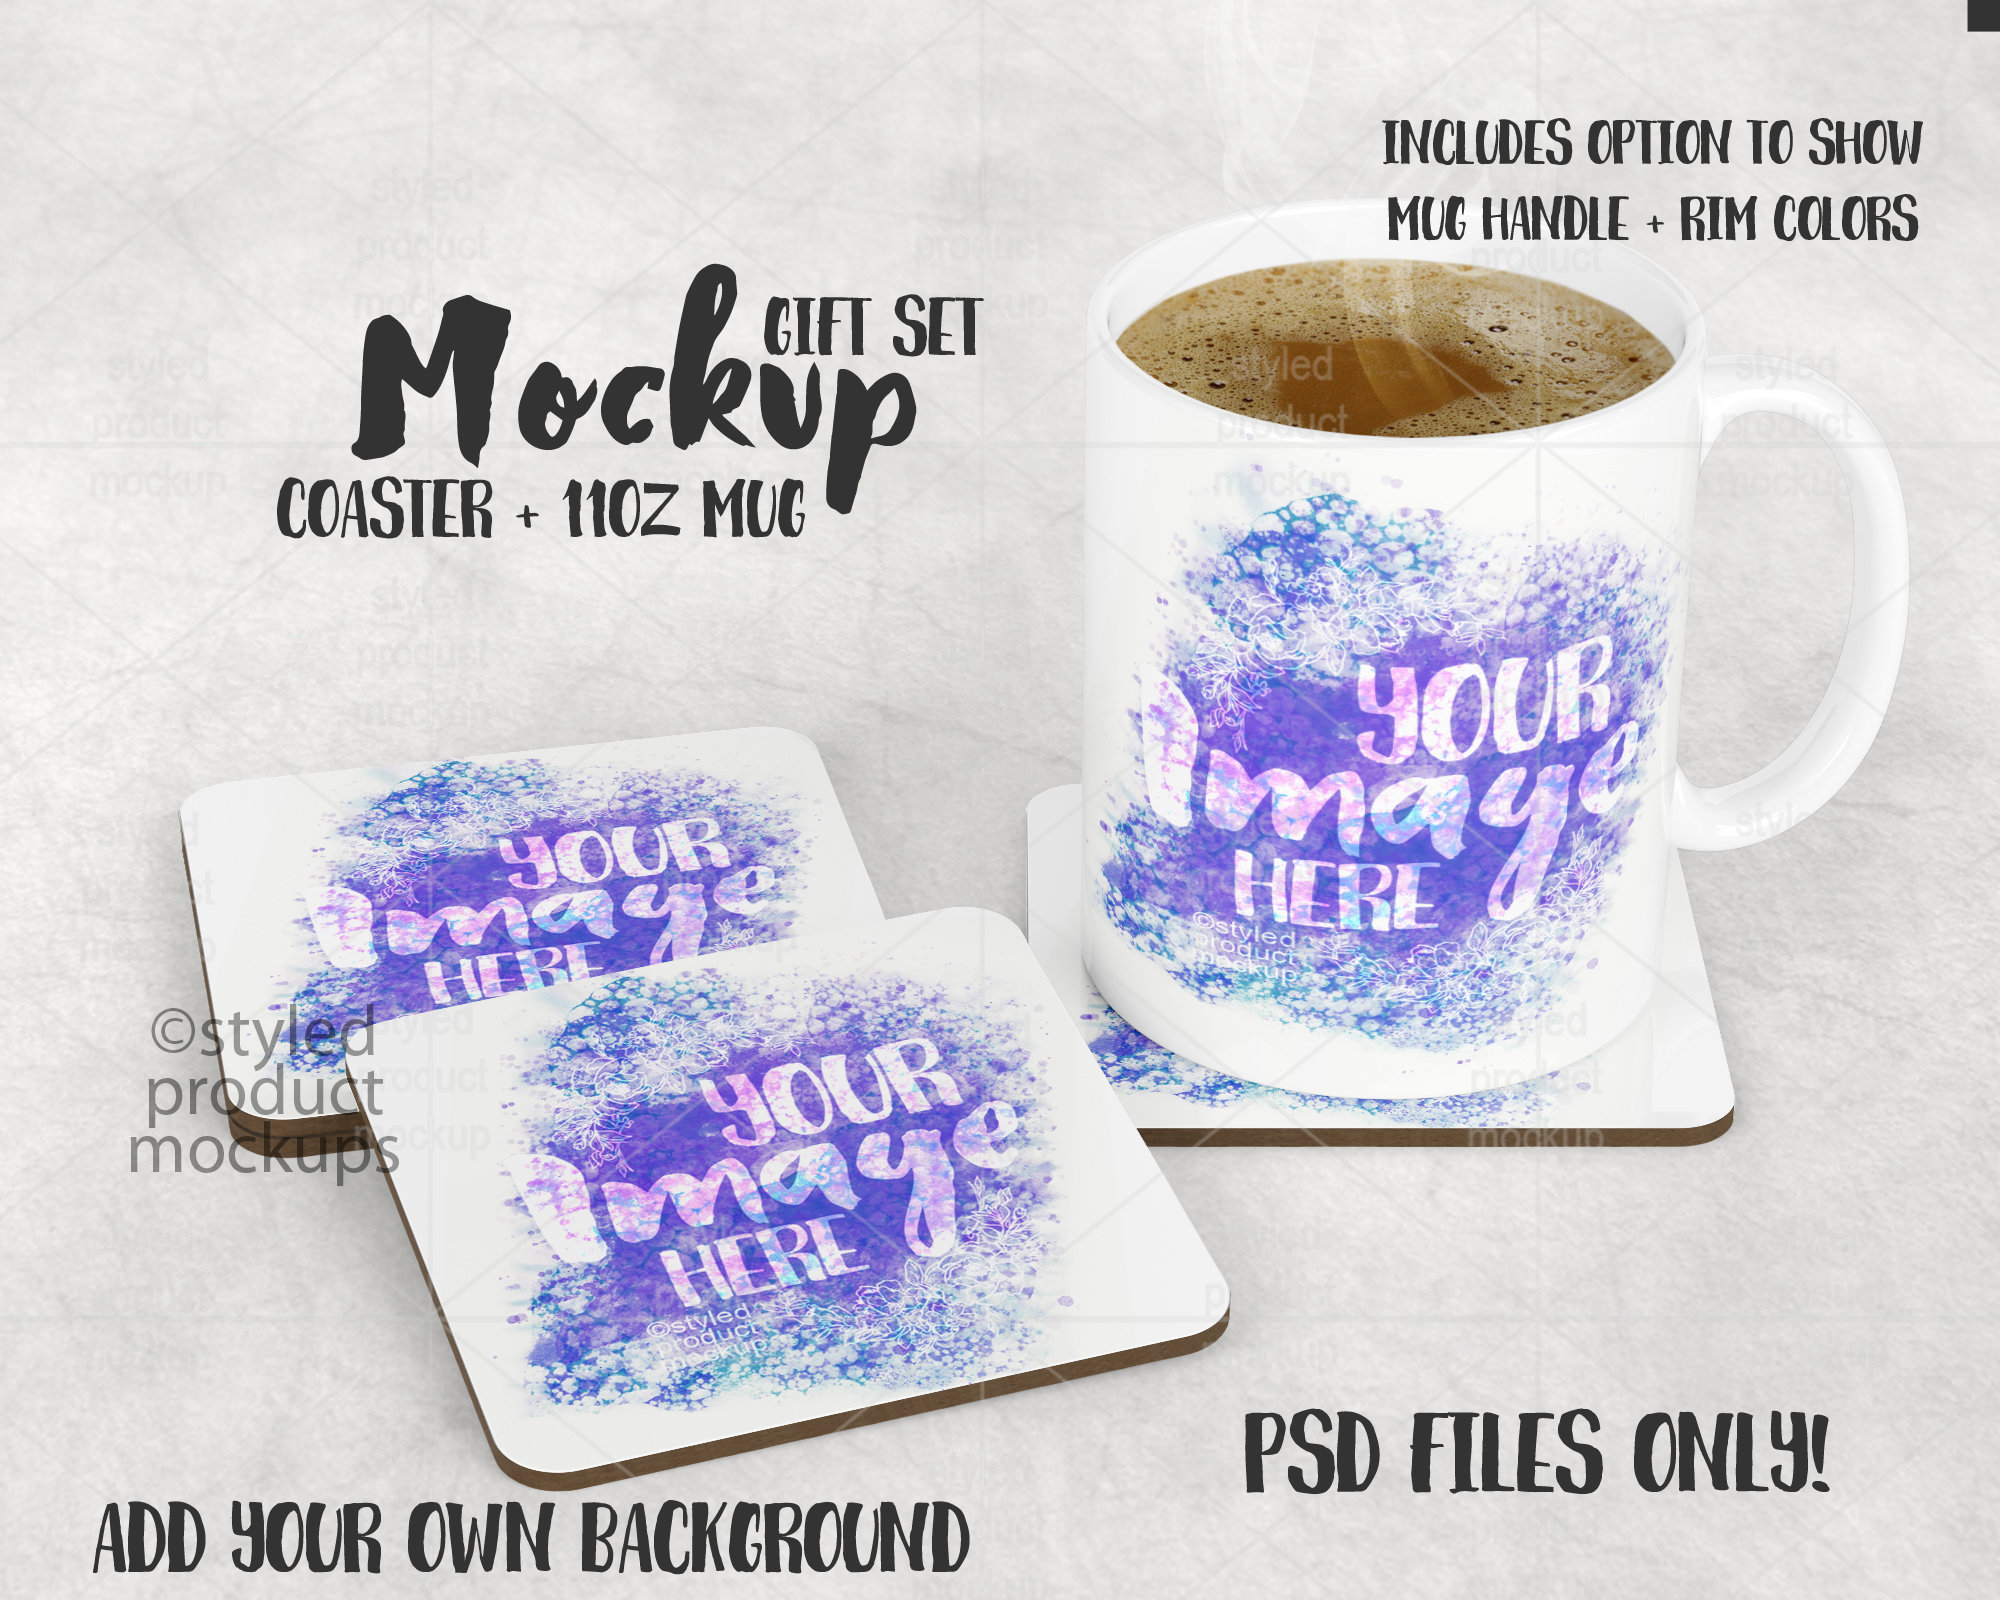 400 g Love You Gift Box + XL M&M'S Mugs 2-Pack